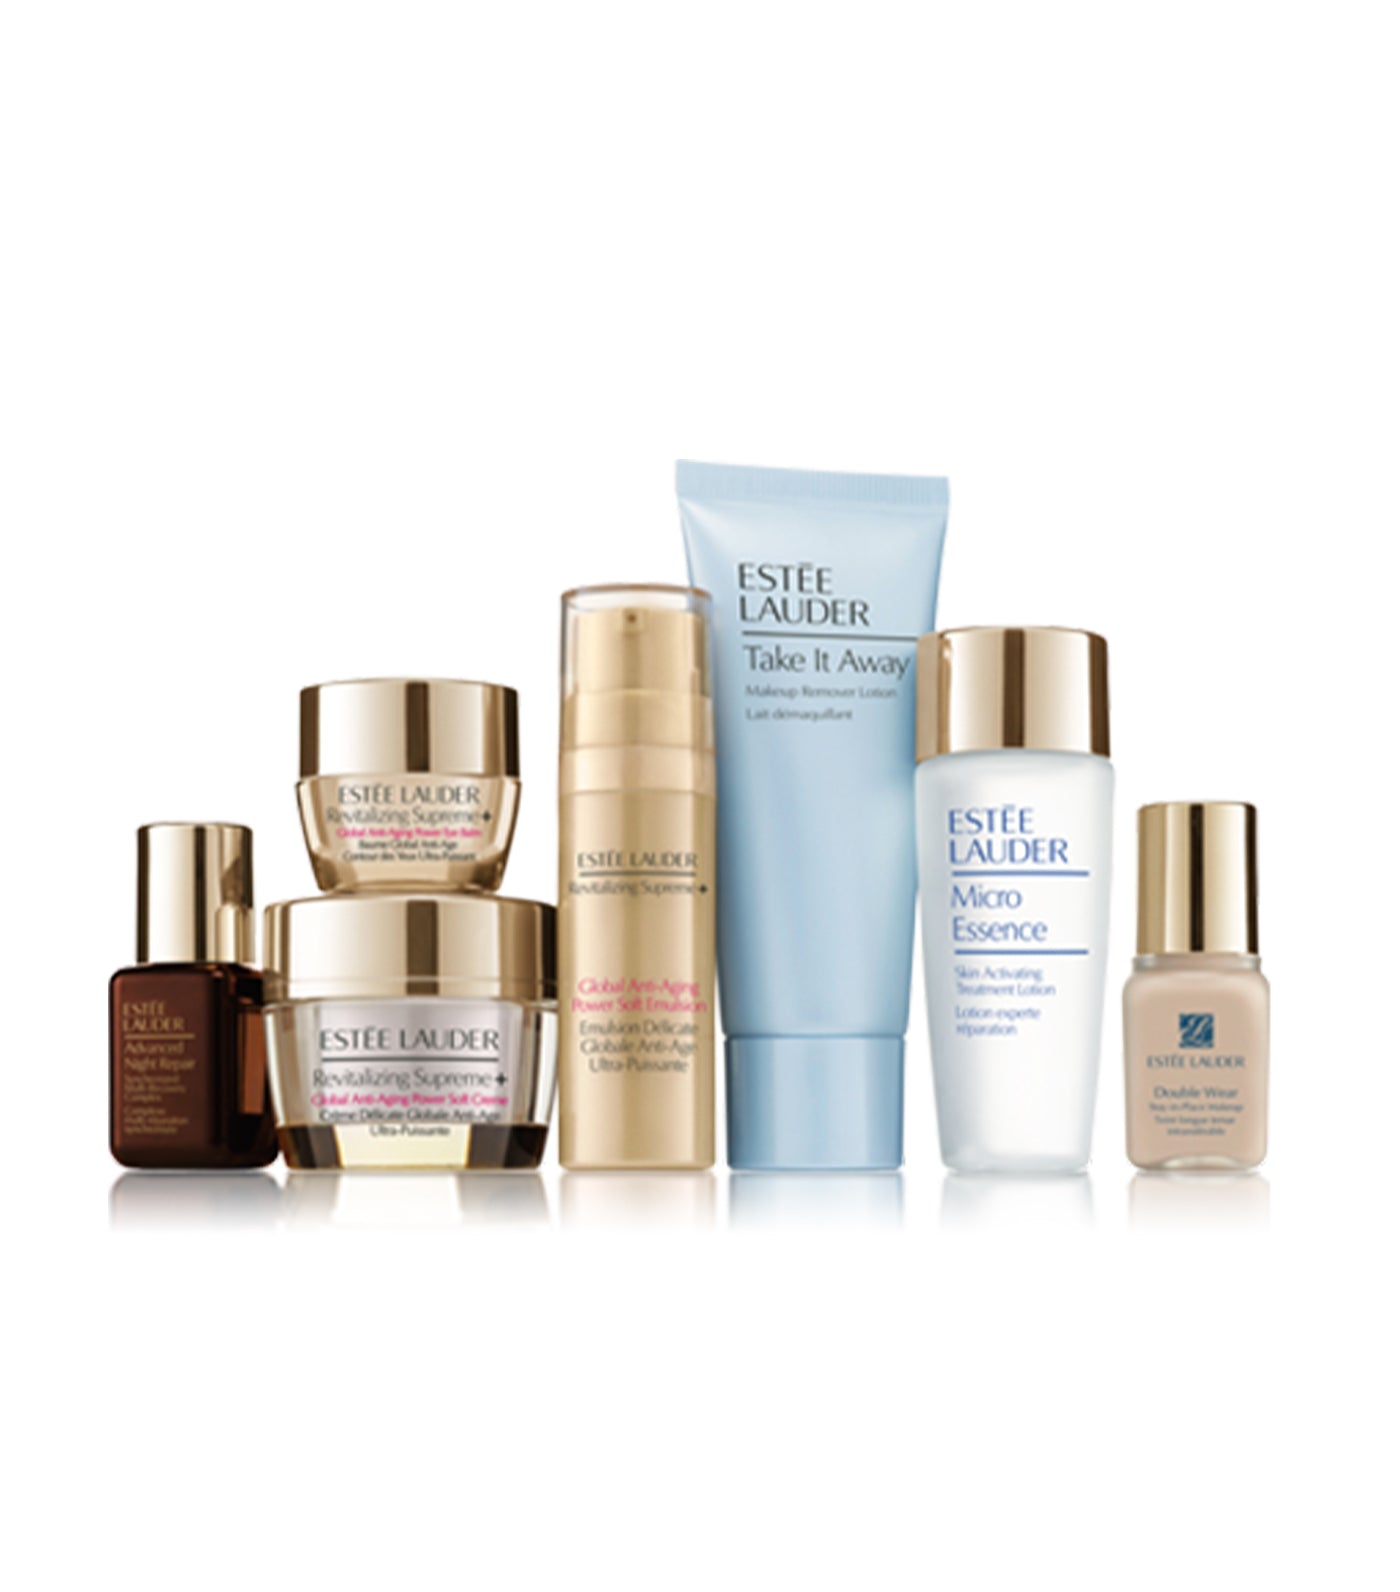 Estée Lauder Free Asia 18 Skincare Set - Revitalizing Supreme Power + Soft Crème set